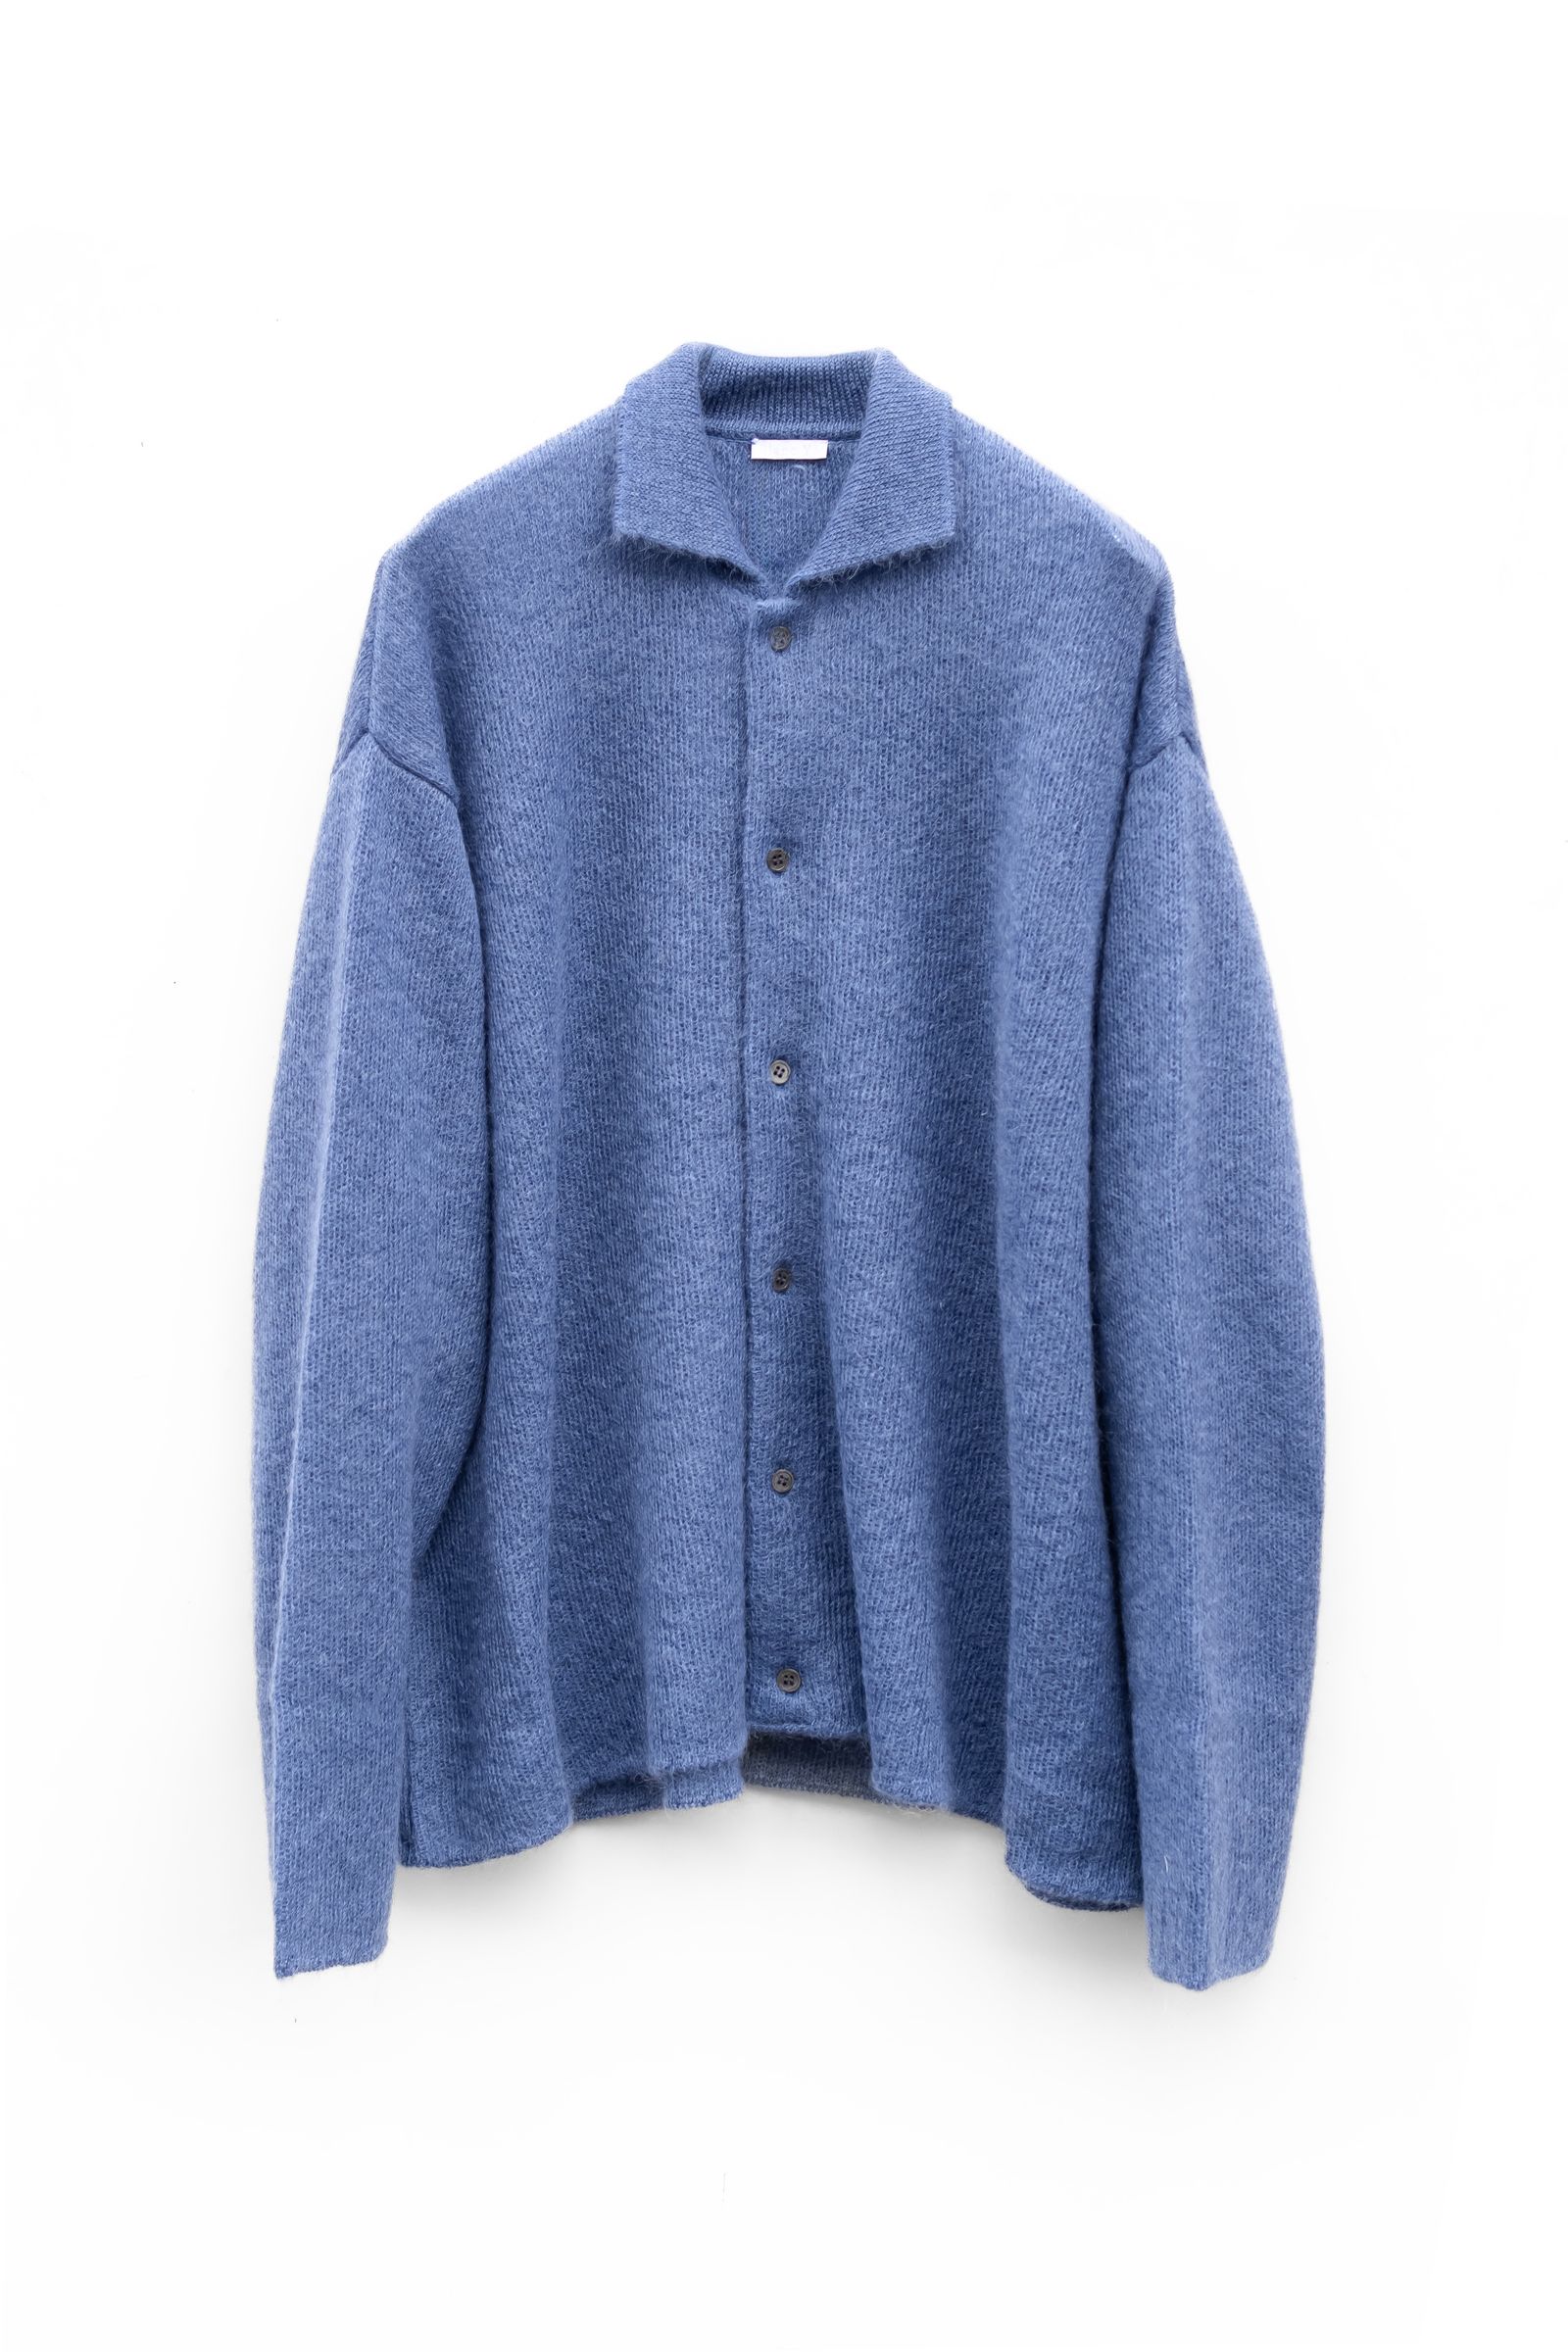 Blanc YM - Kid Mohair Knit Shirt / Beige | Retikle Online Store